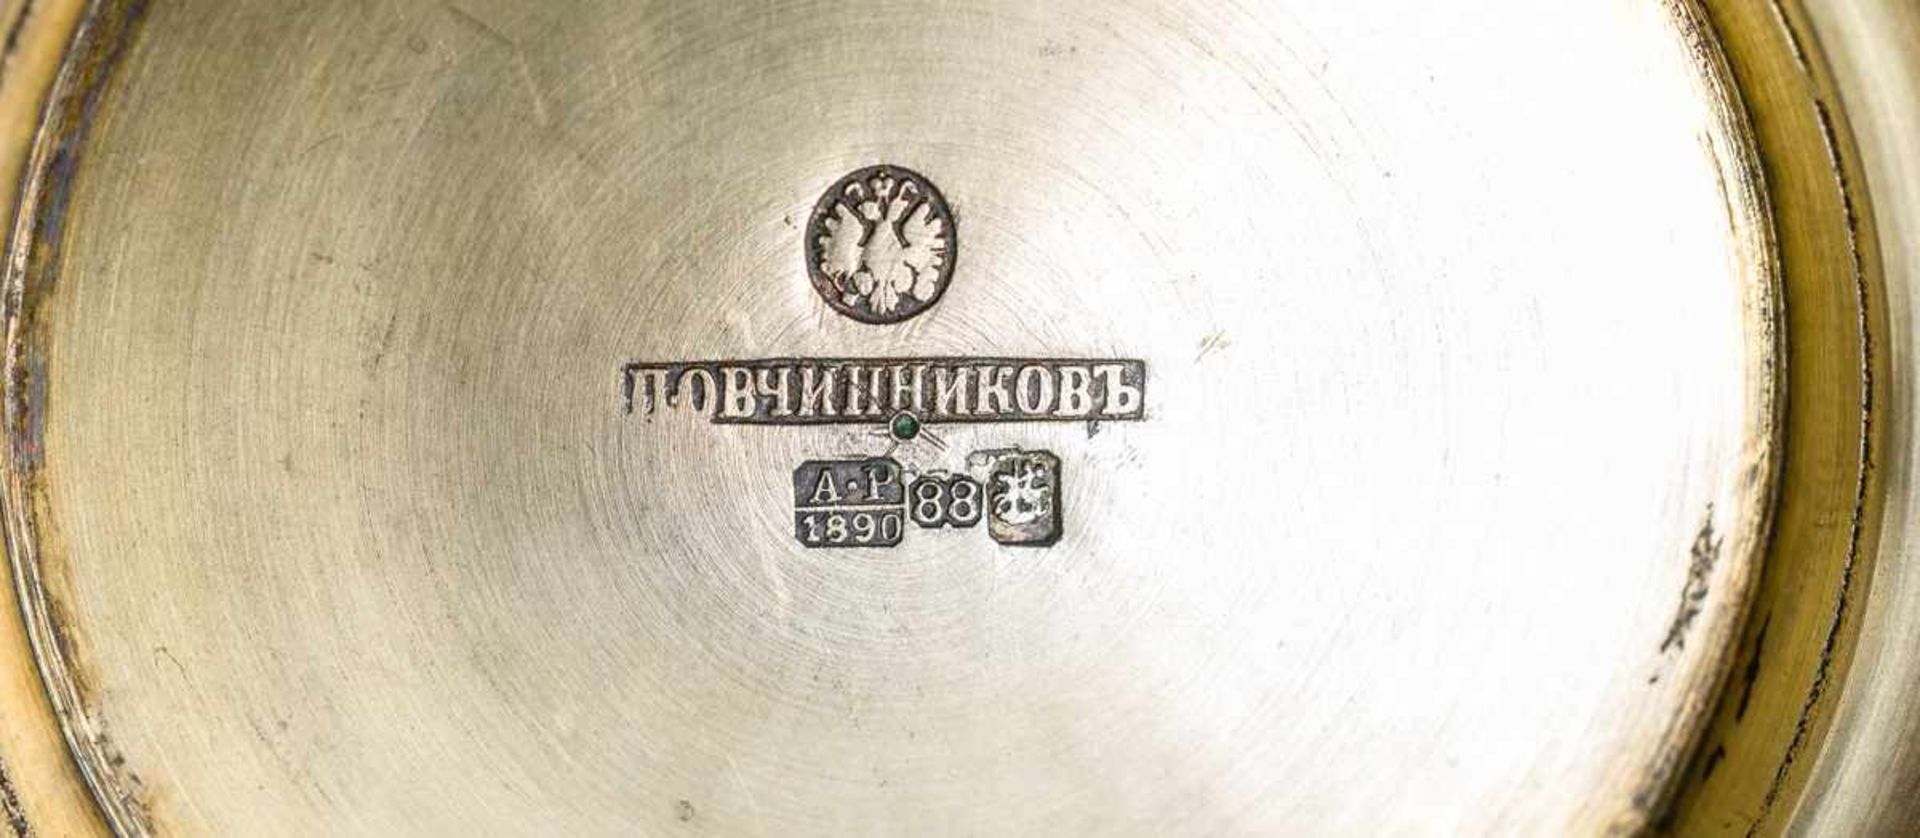 Podstakannik Silber (241g), 88er Feingehaltsmarke, emailliert, Moskau 1890 Beschaumeister: A. - Bild 2 aus 2